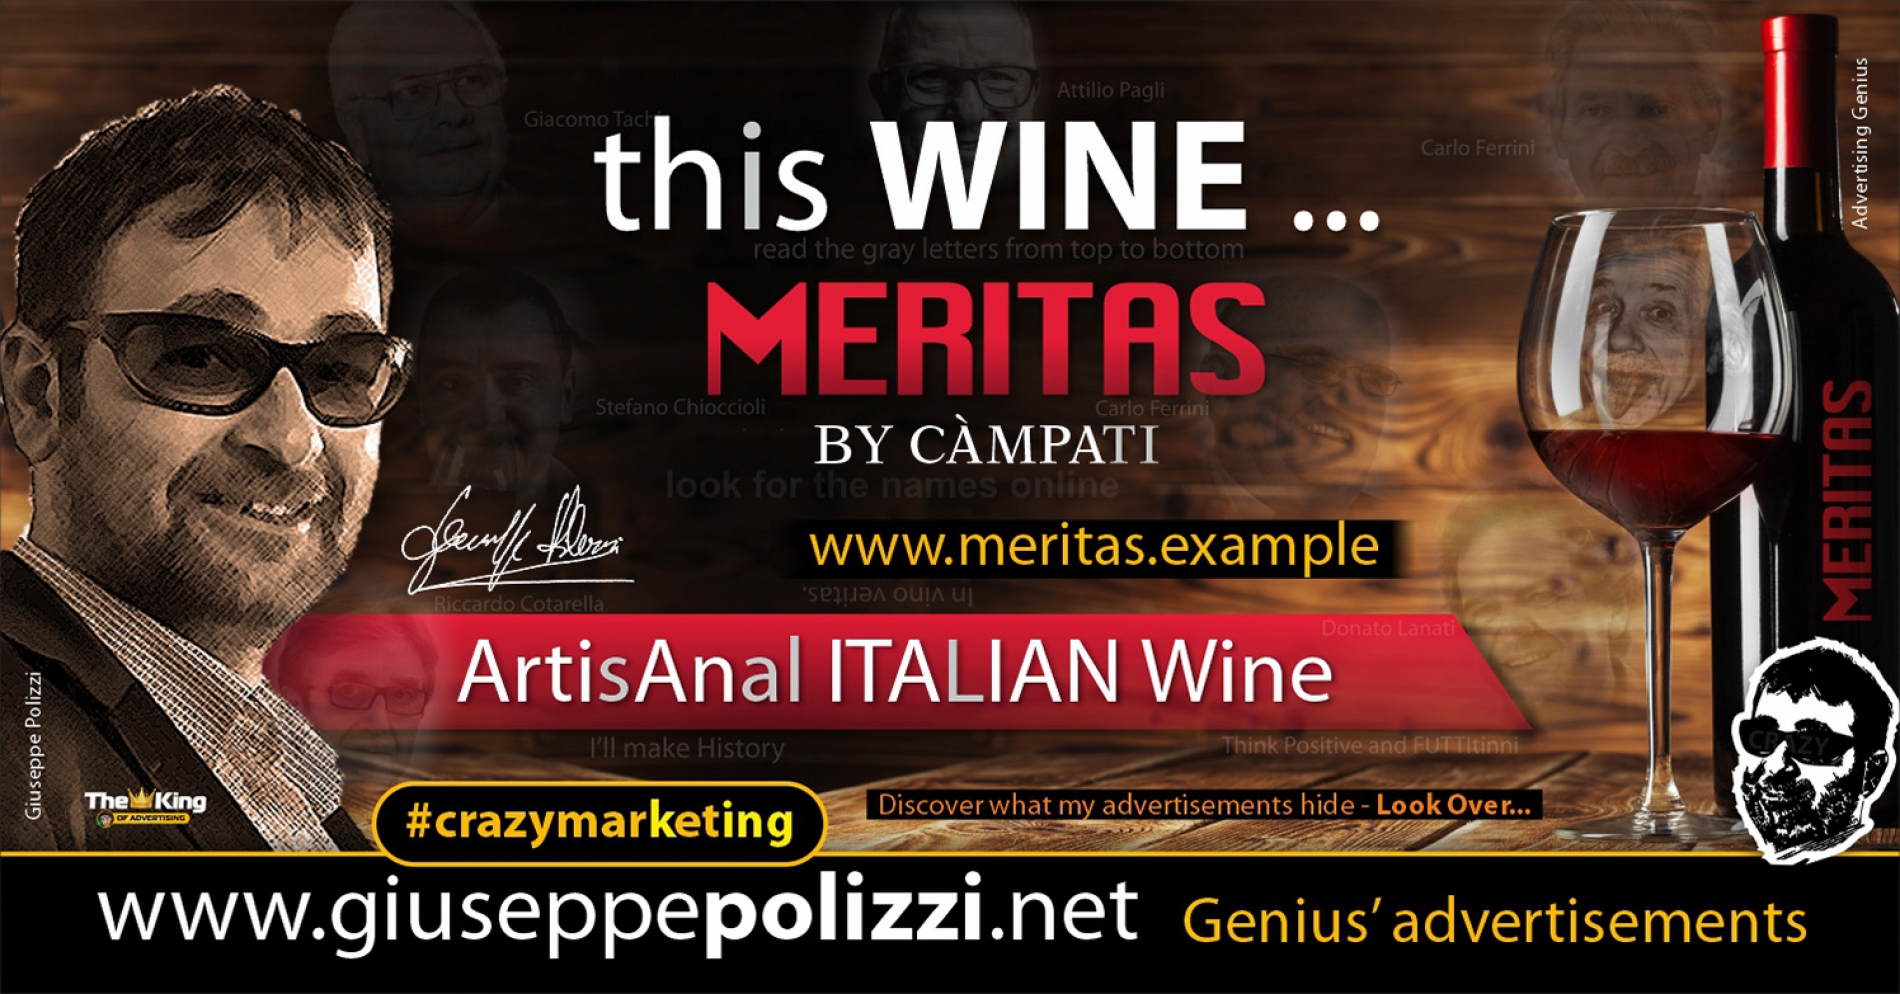 giuseppe polizzi advertising this wine Meritas Crazy Marketing  2021